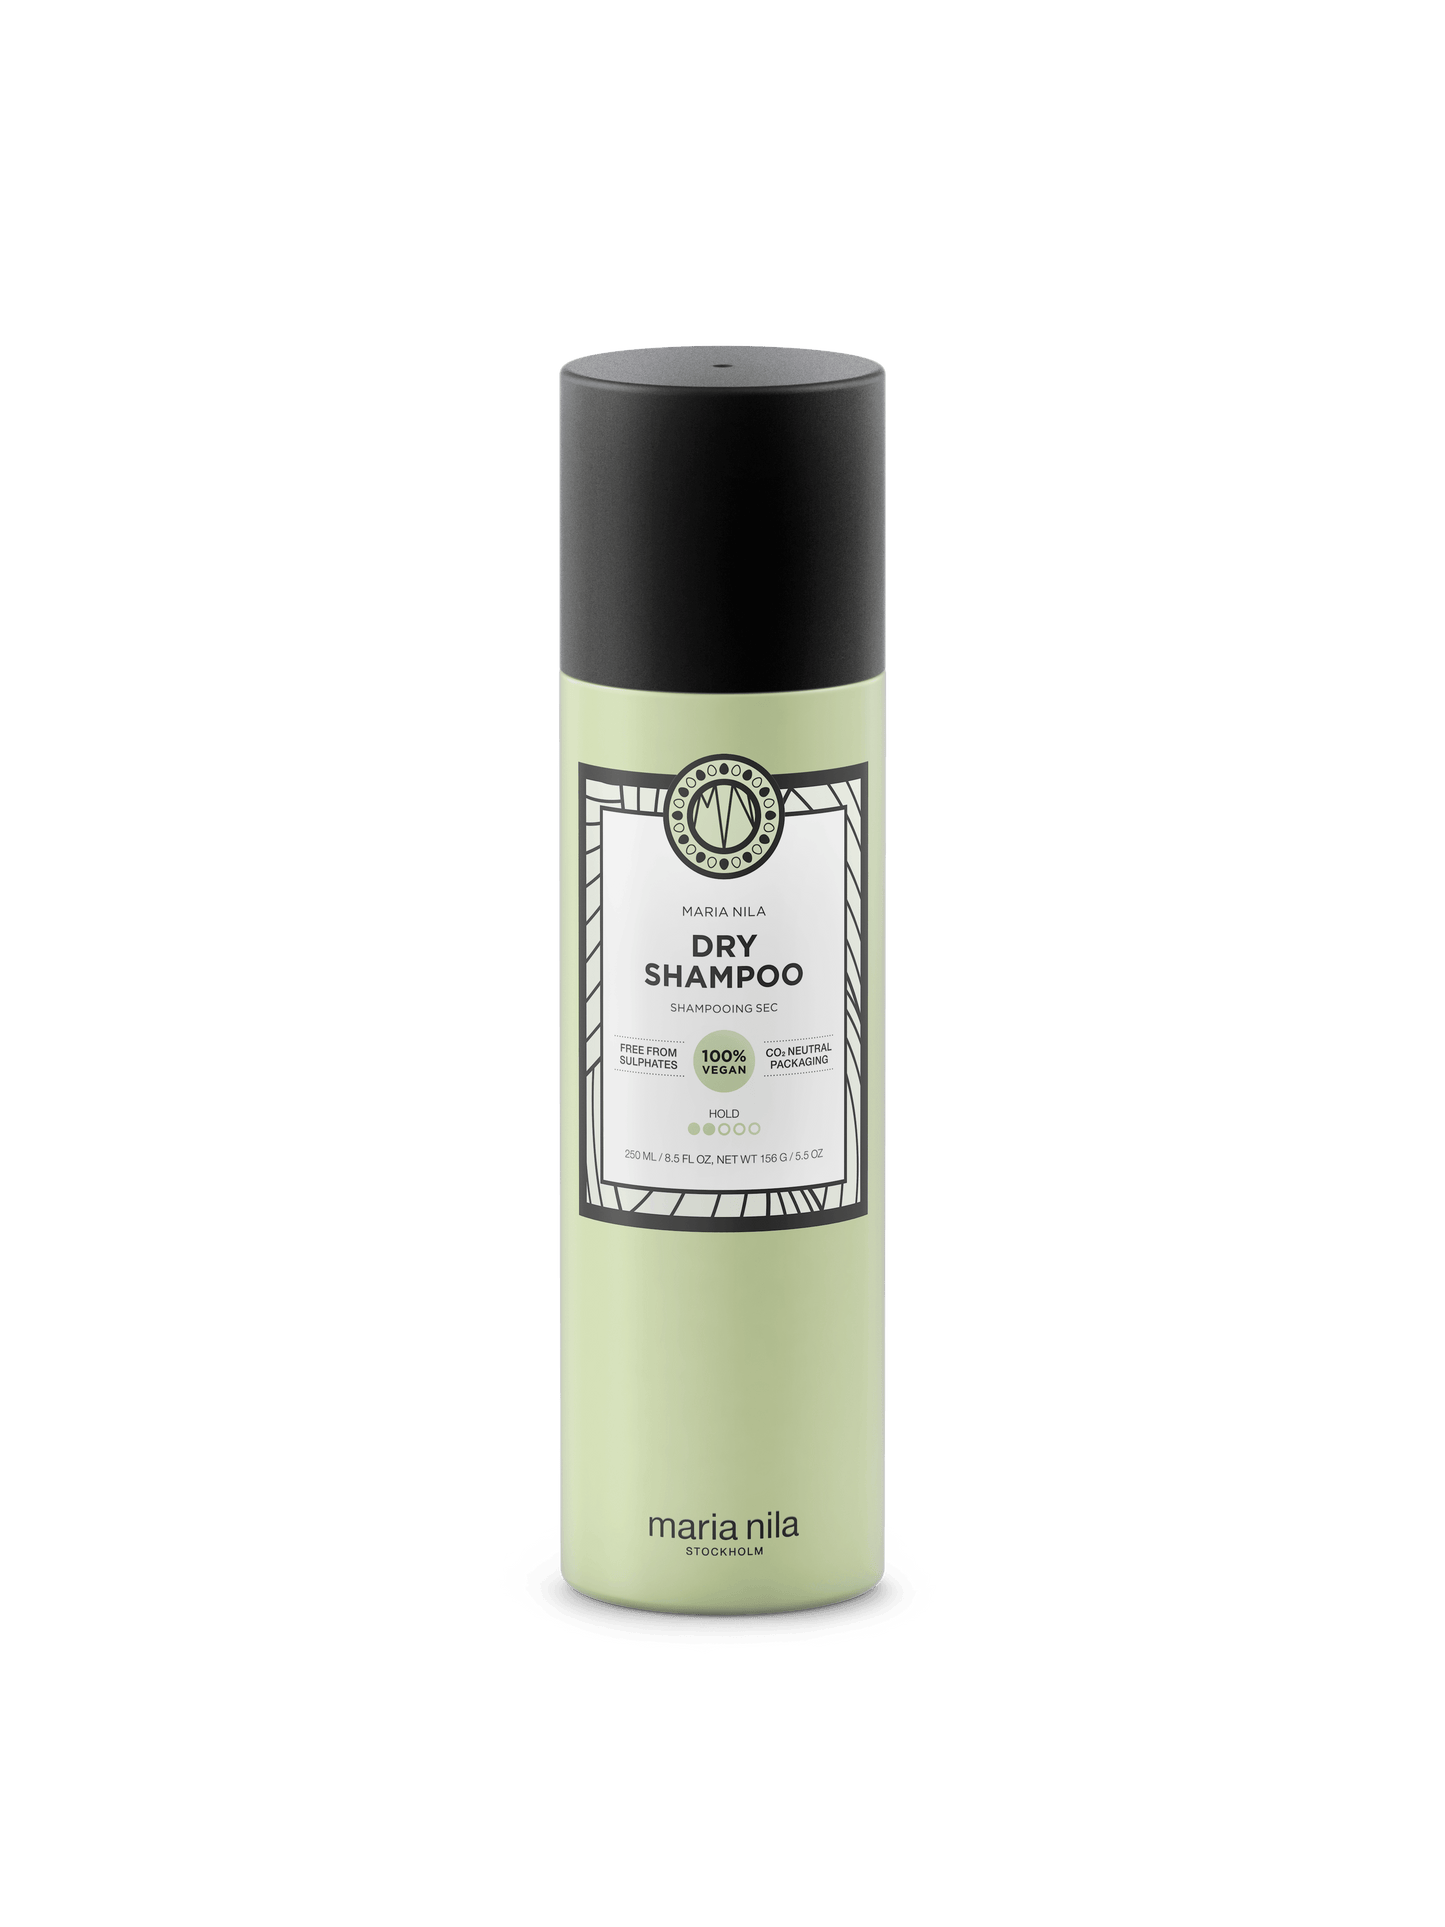 Dry Shampoo - The Coloroom 